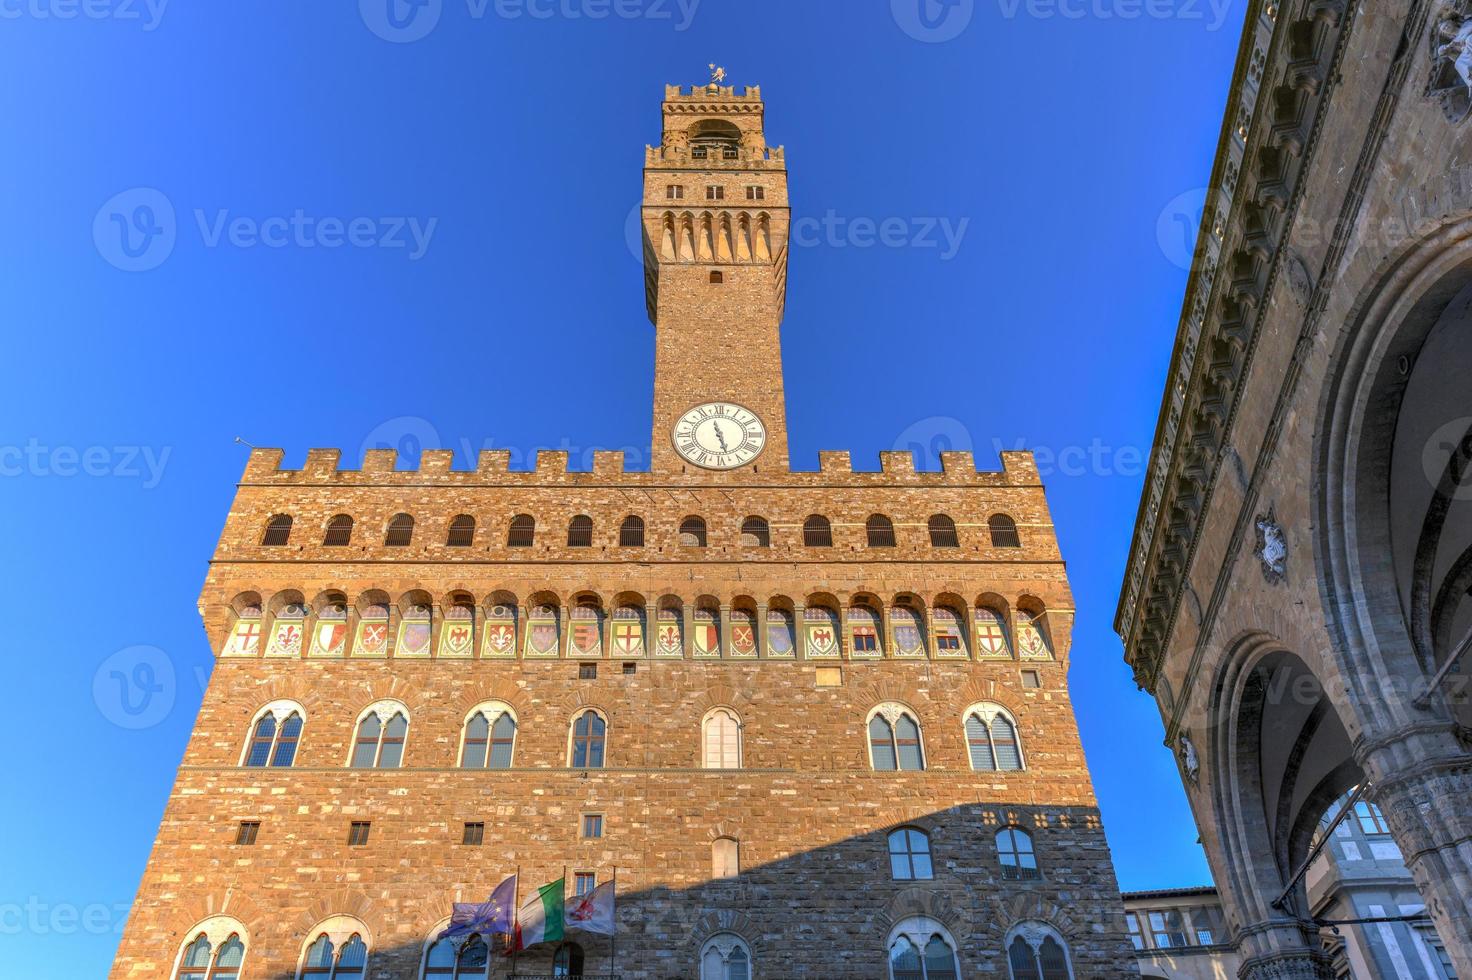 arnolfo toren in palazzo vecchio in Florence, Italië foto